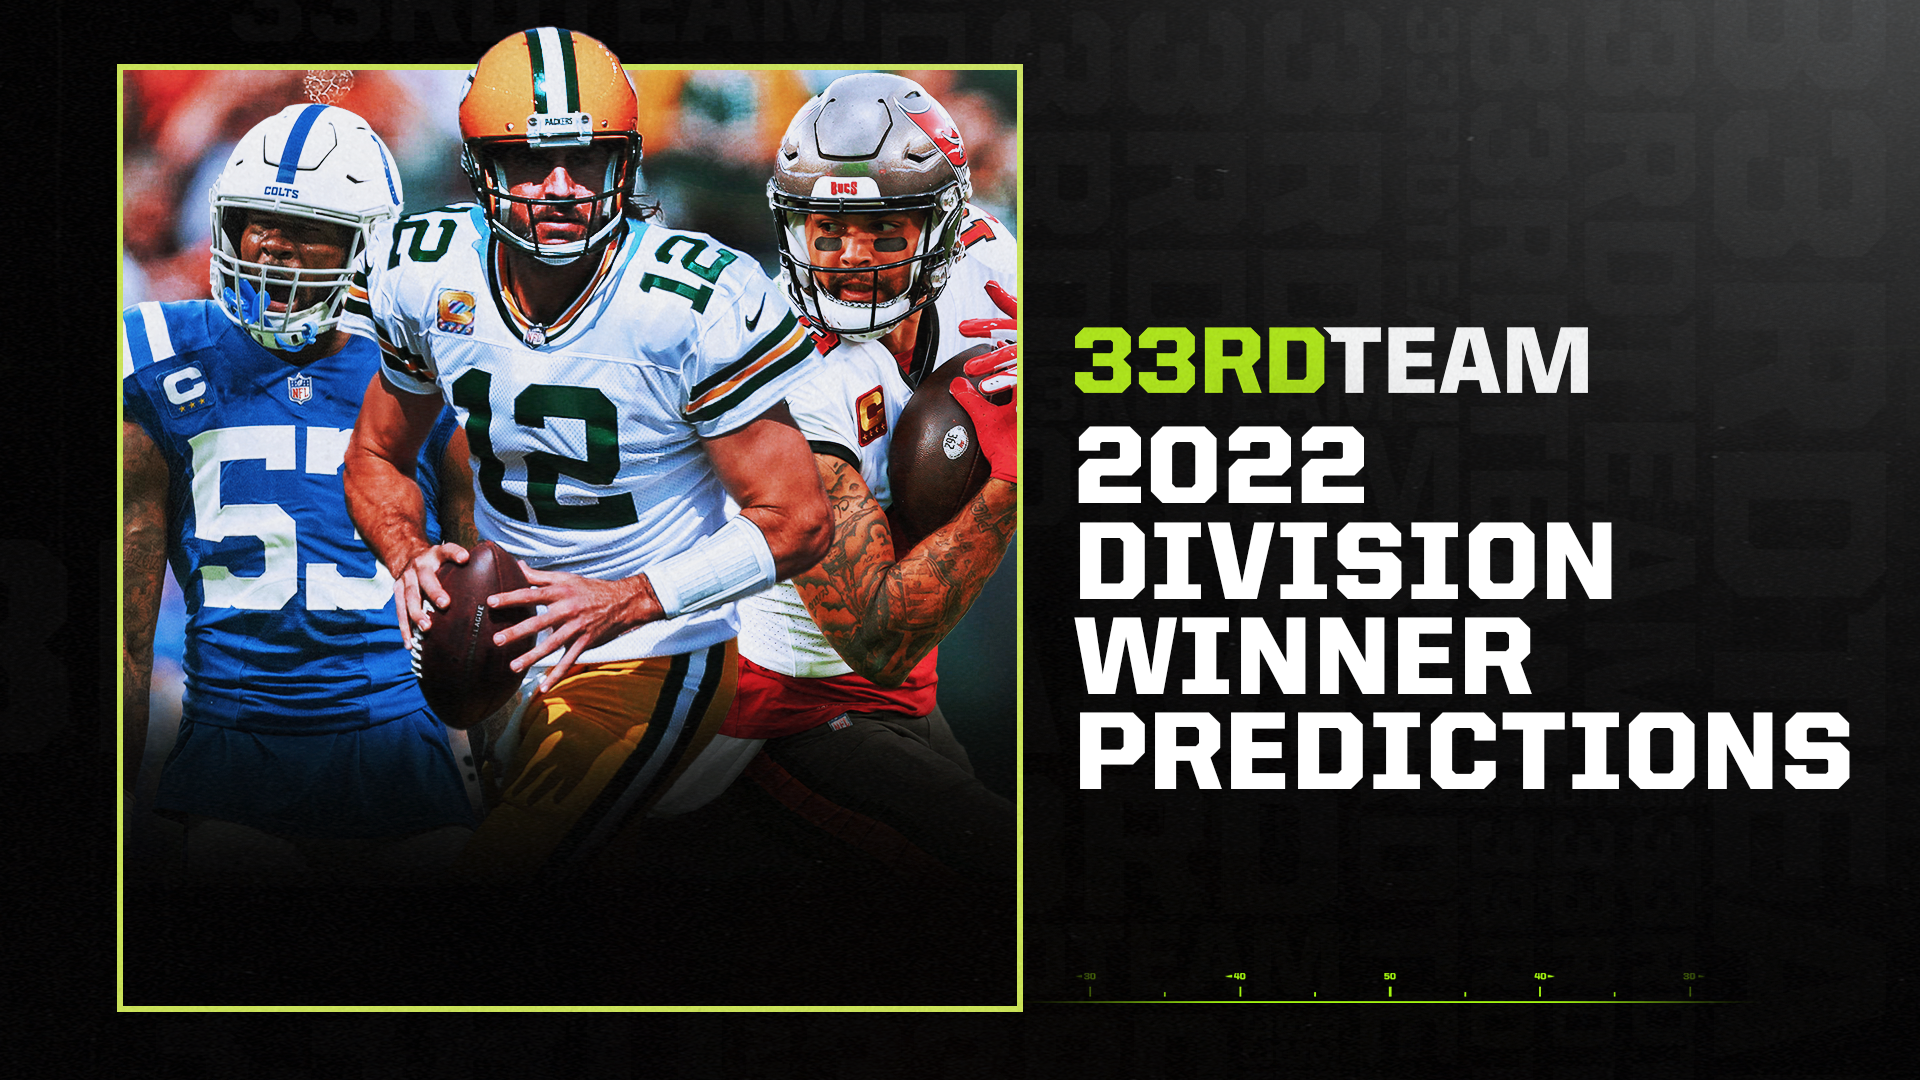 2022 NFL Division Winner Predictions